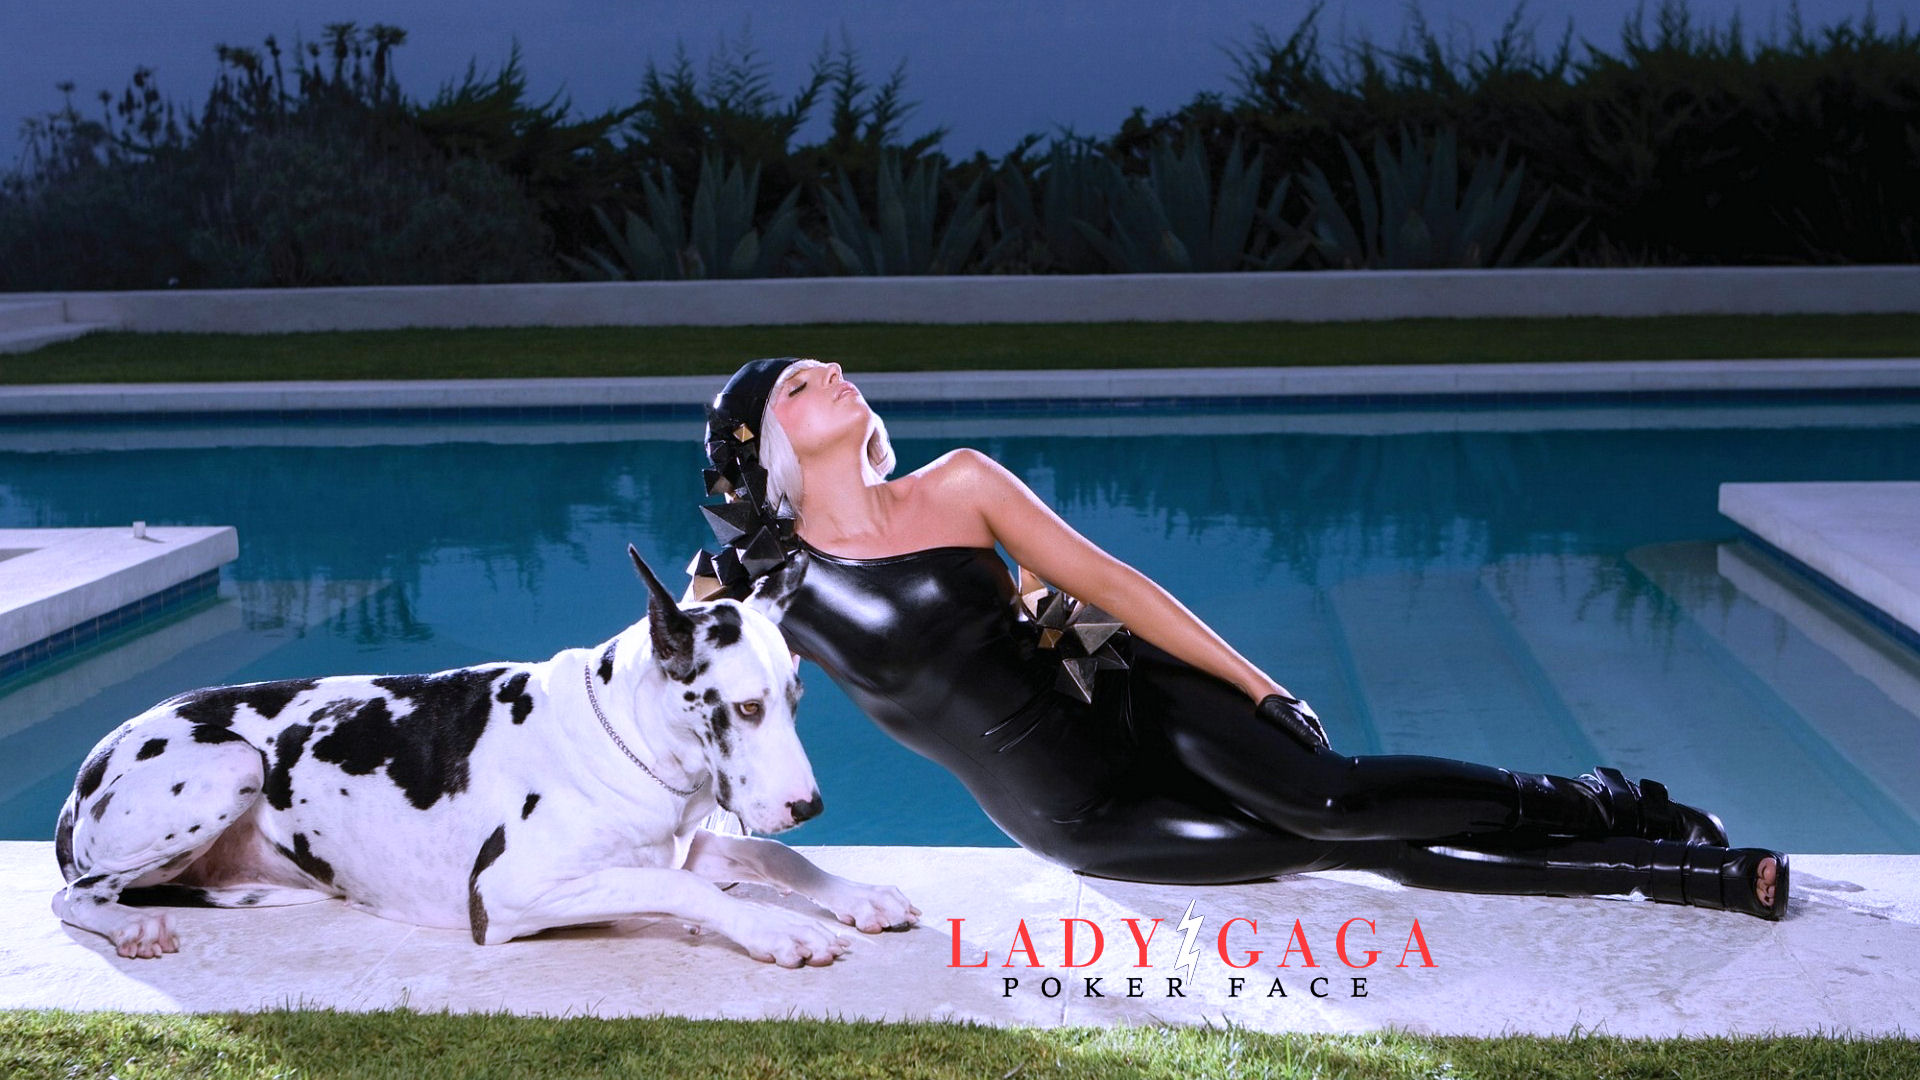 Lady GaGa Poker Face - Lady Gaga Wallpaper (36970127) - Fanpop